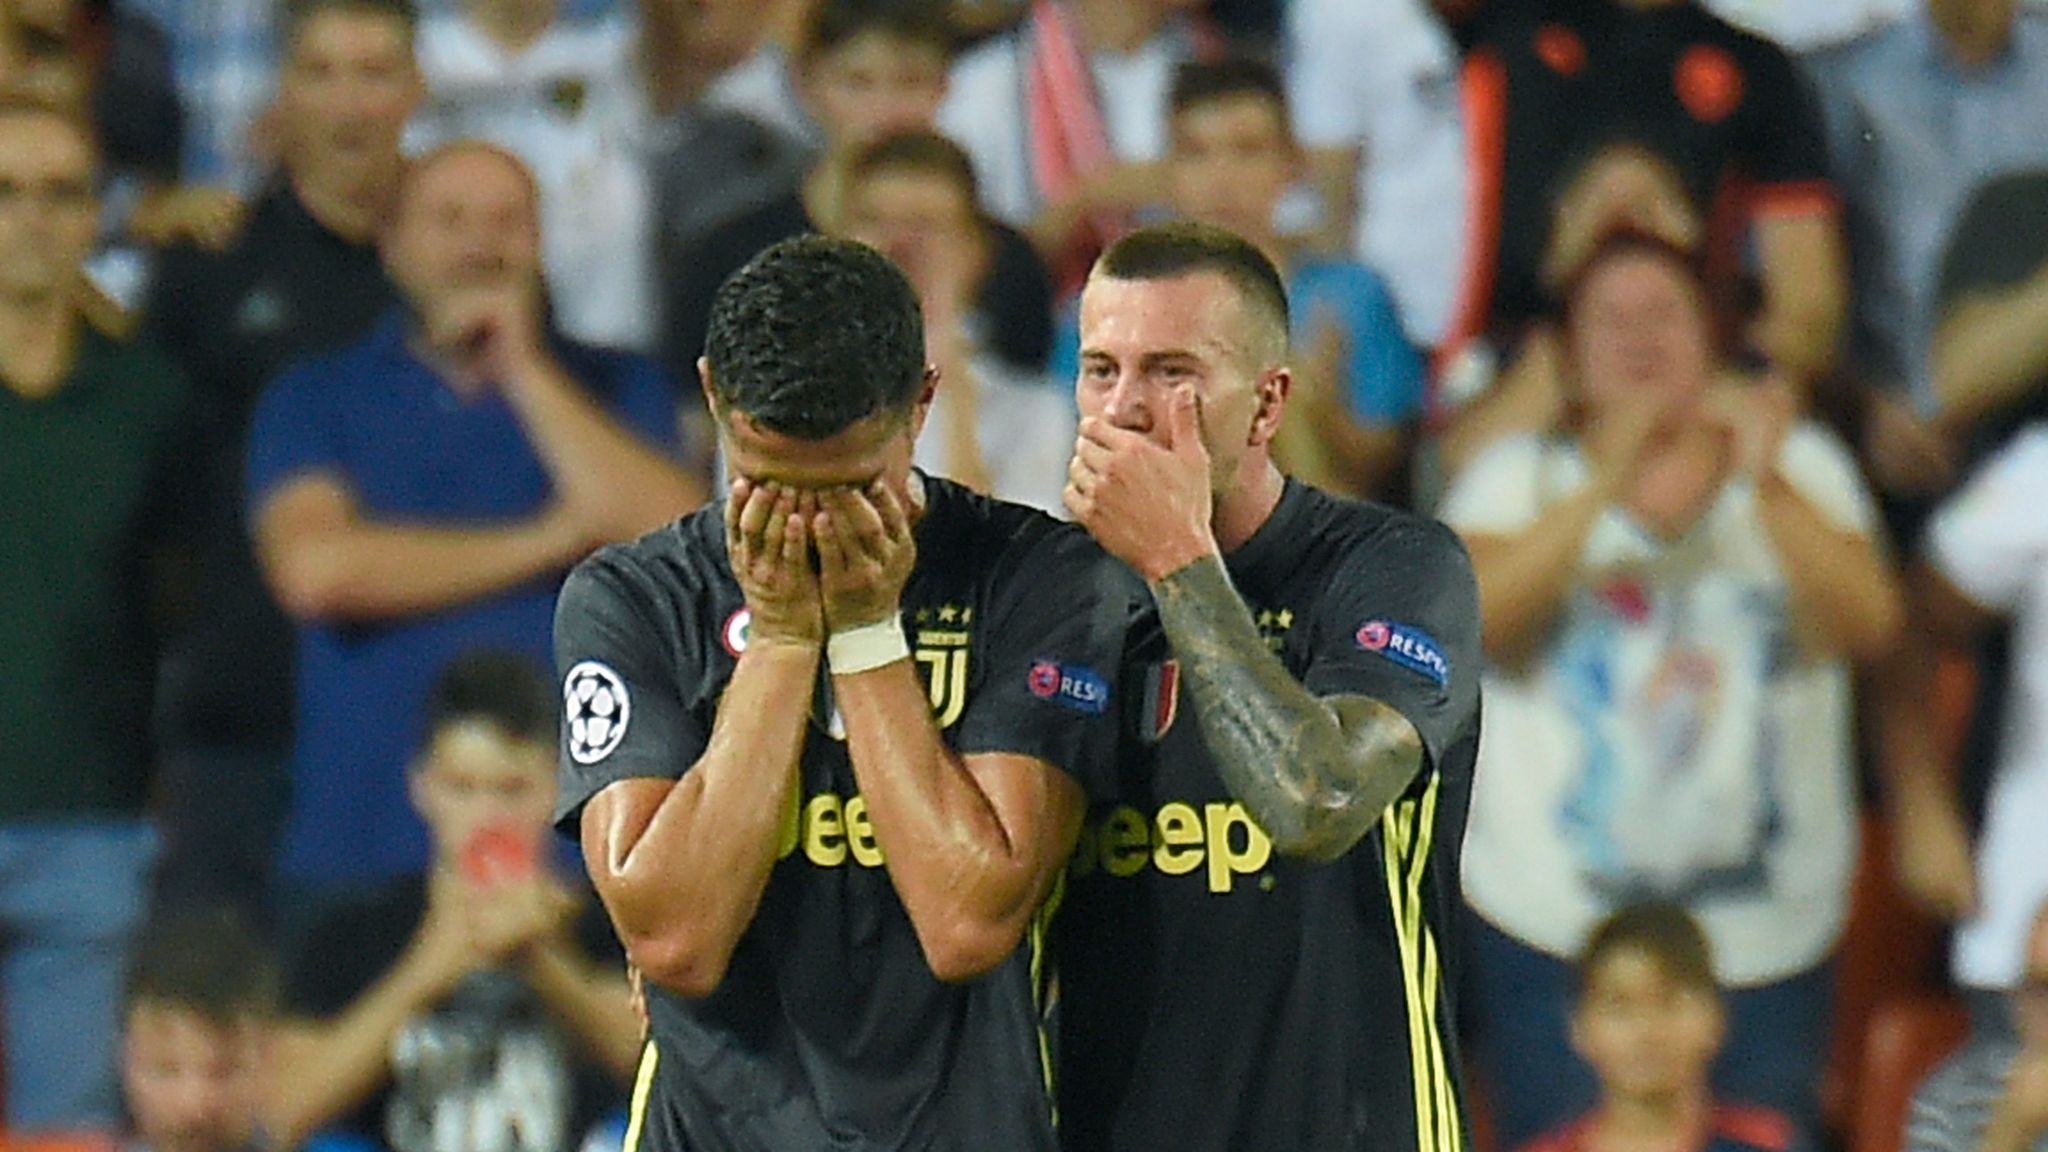 Cristiano Ronaldo sent off Juventus in Champions League clash at Valencia | Football News | Sky